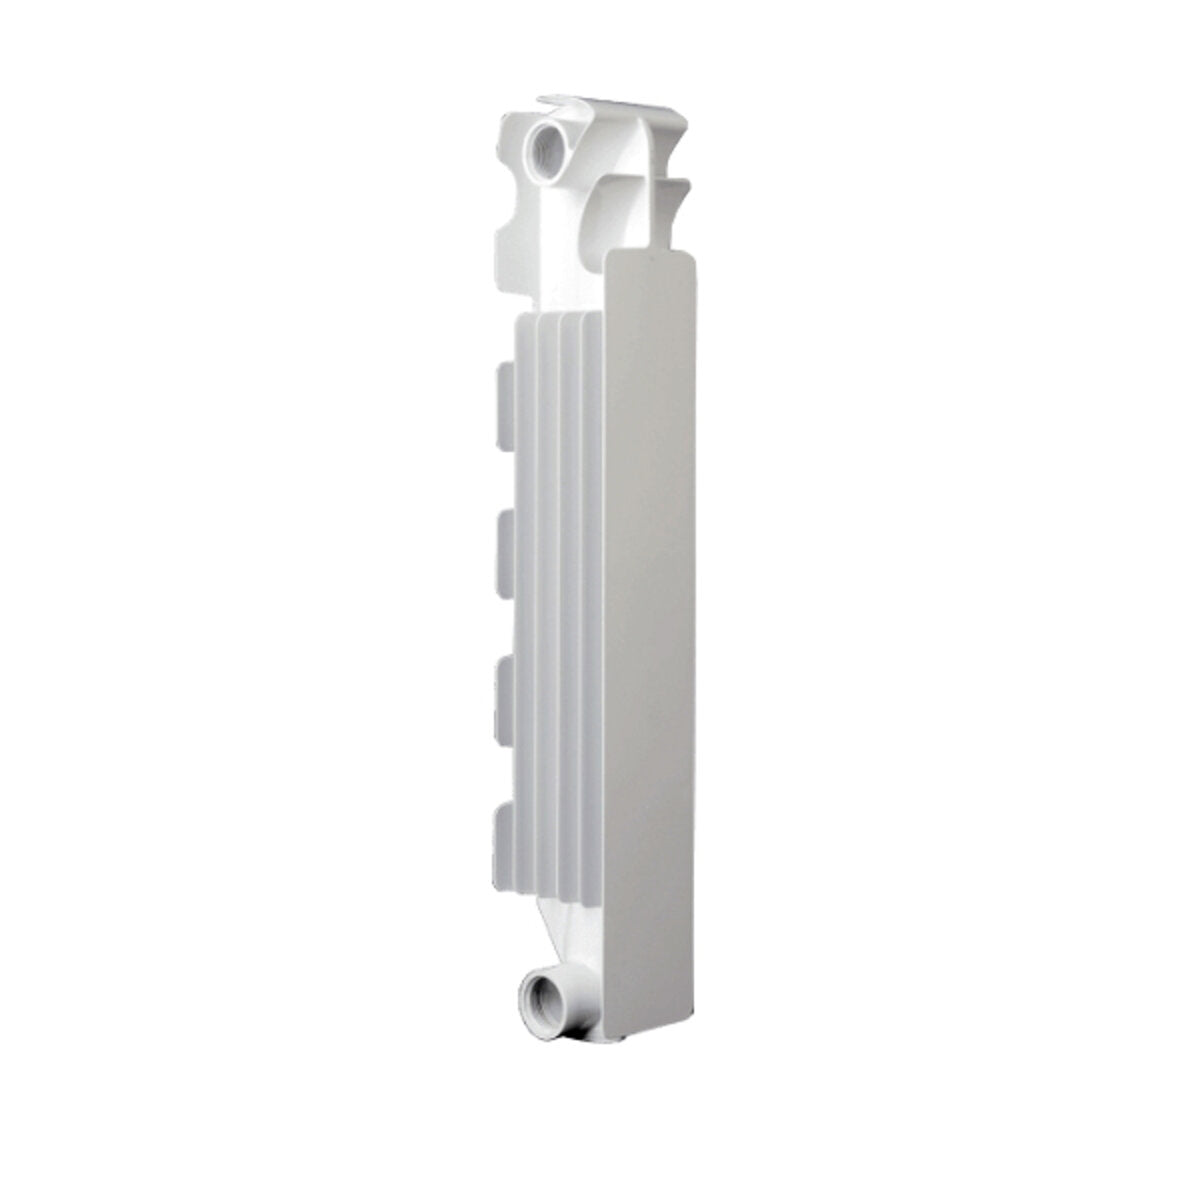 Fondital radiator in die-cast aluminum calidor super b4 single element center distance 500 mm